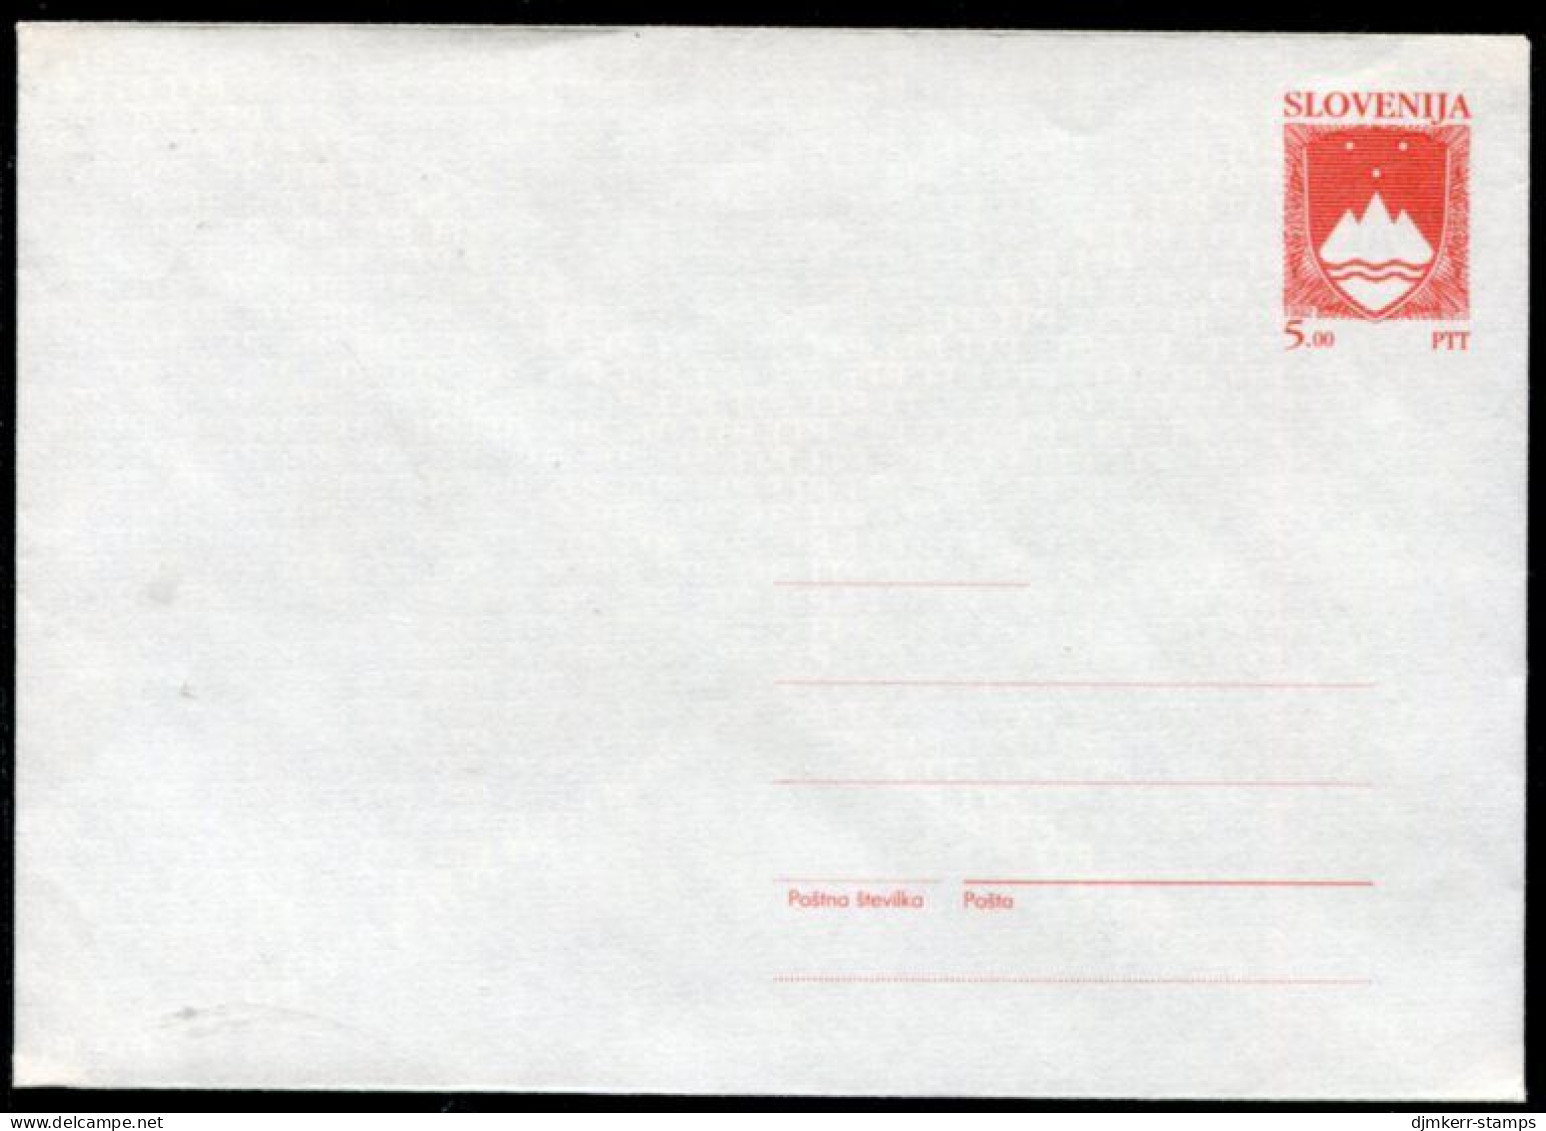 SLOVENIA 1992 5.00 T.  Postal Stationery Envelope On White Paper, Unused.  Michel U1a - Slovenië